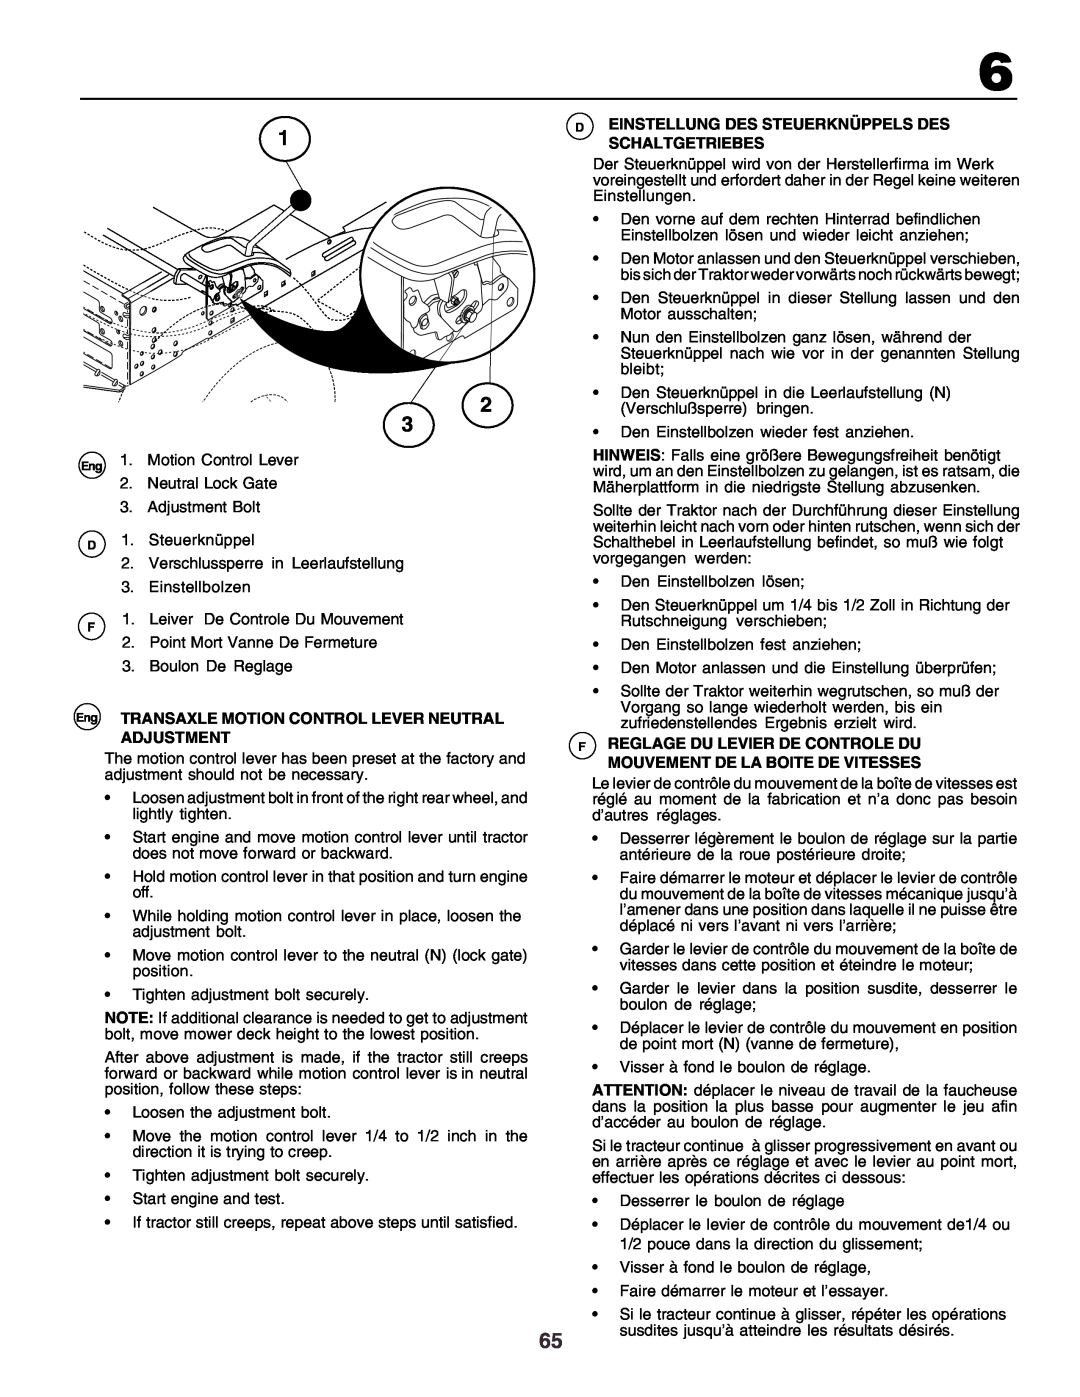 Husqvarna YTH170 instruction manual Eng 1. Motion Control Lever 2.Neutral Lock Gate 